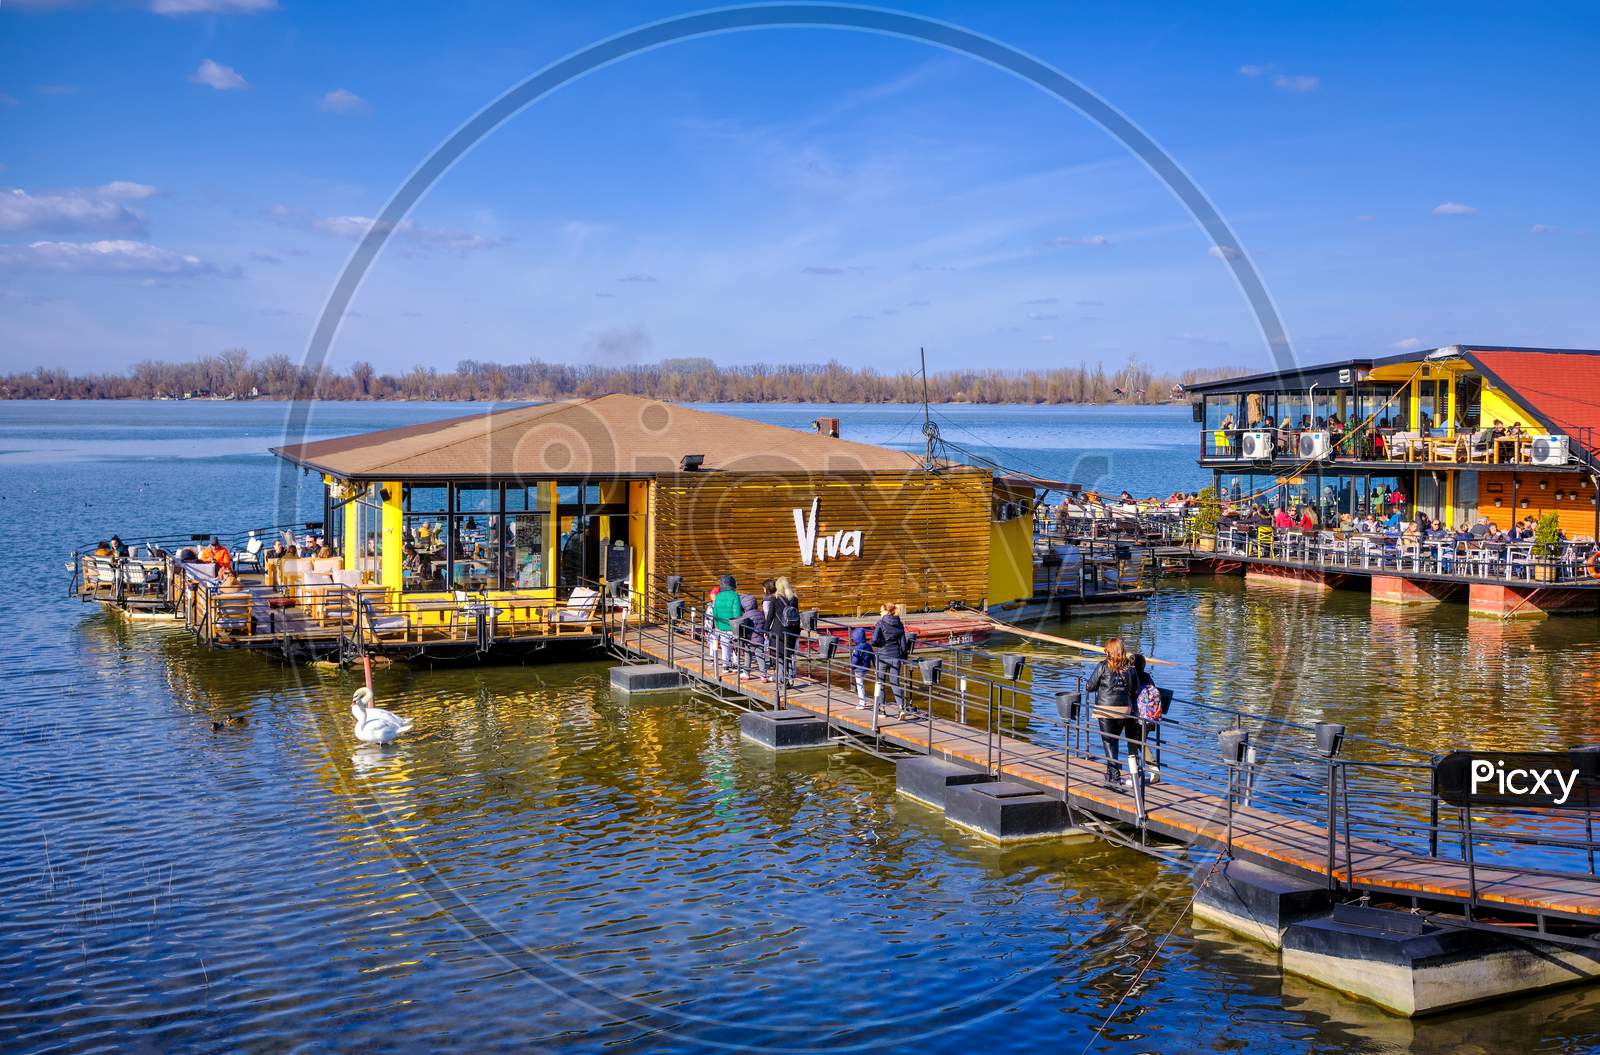 River Raft Restaurants And Bars On The Danube River In Belgrade, Serbia